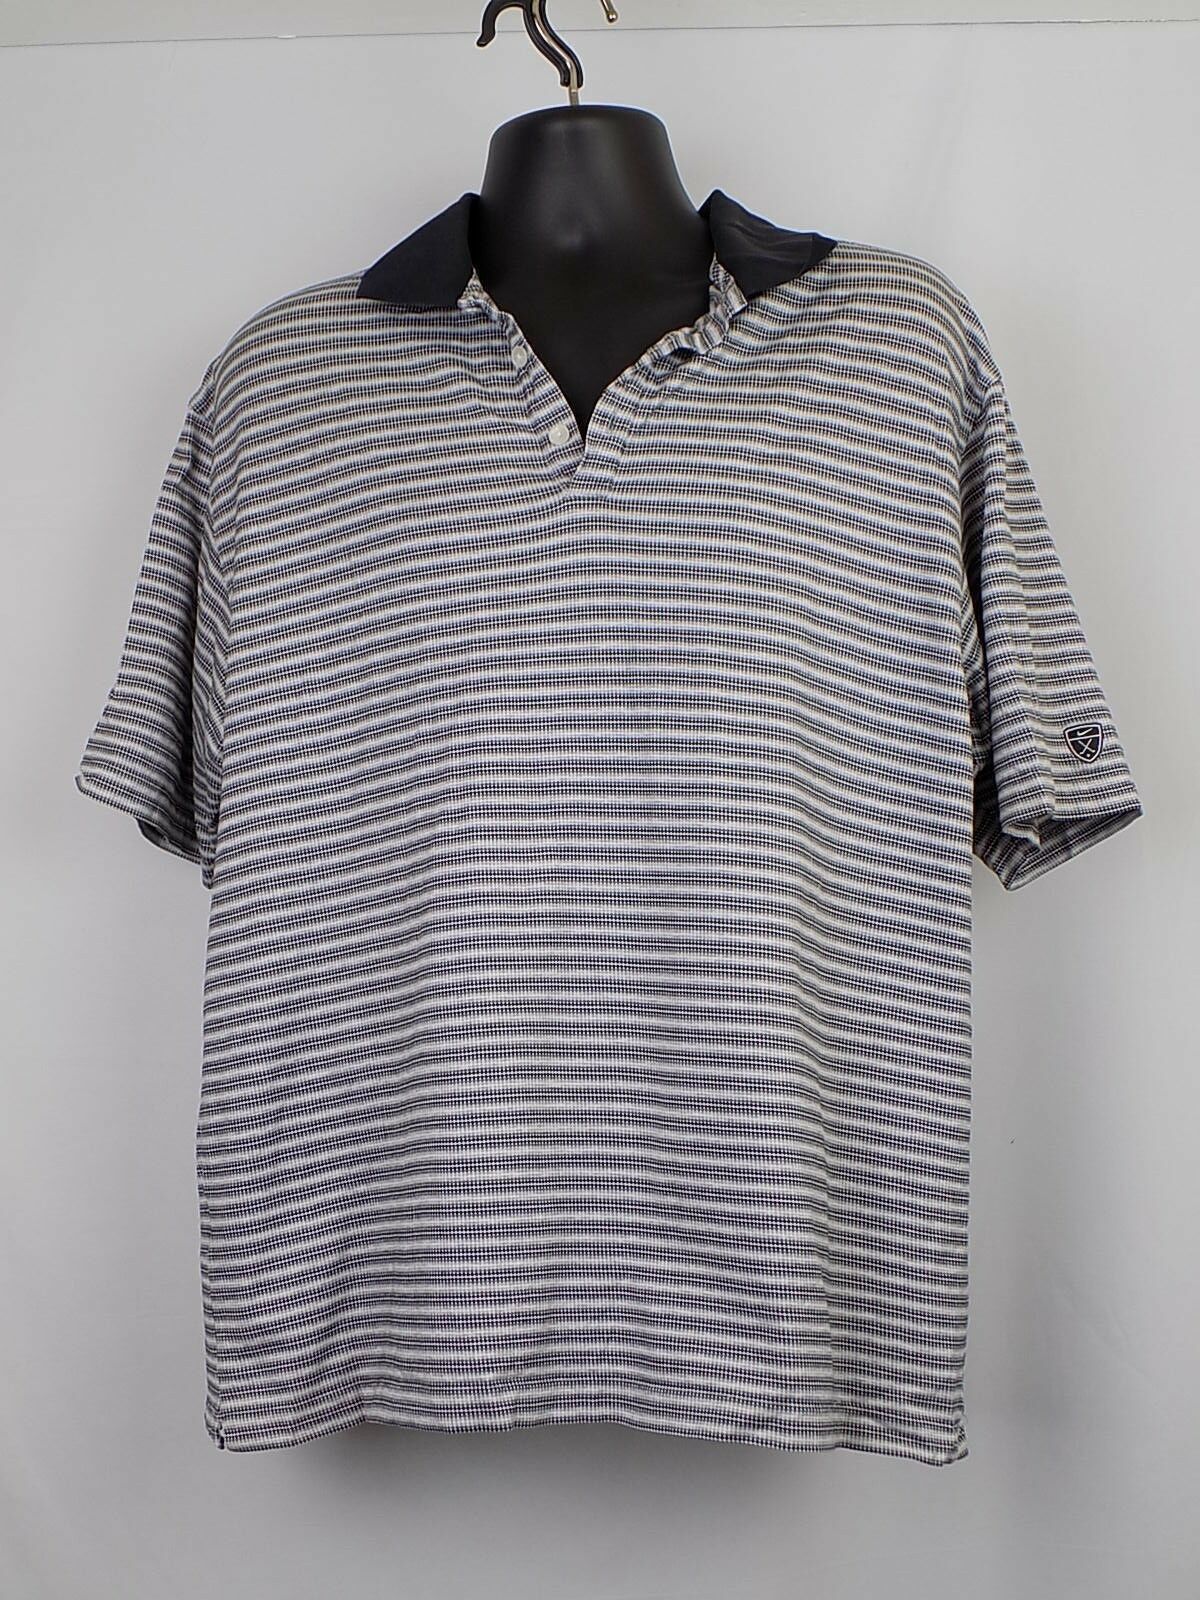 Primary image for Nike Golf Men Golf Shirt Size Large Gray Shirt Black Stripes Short Sleeve